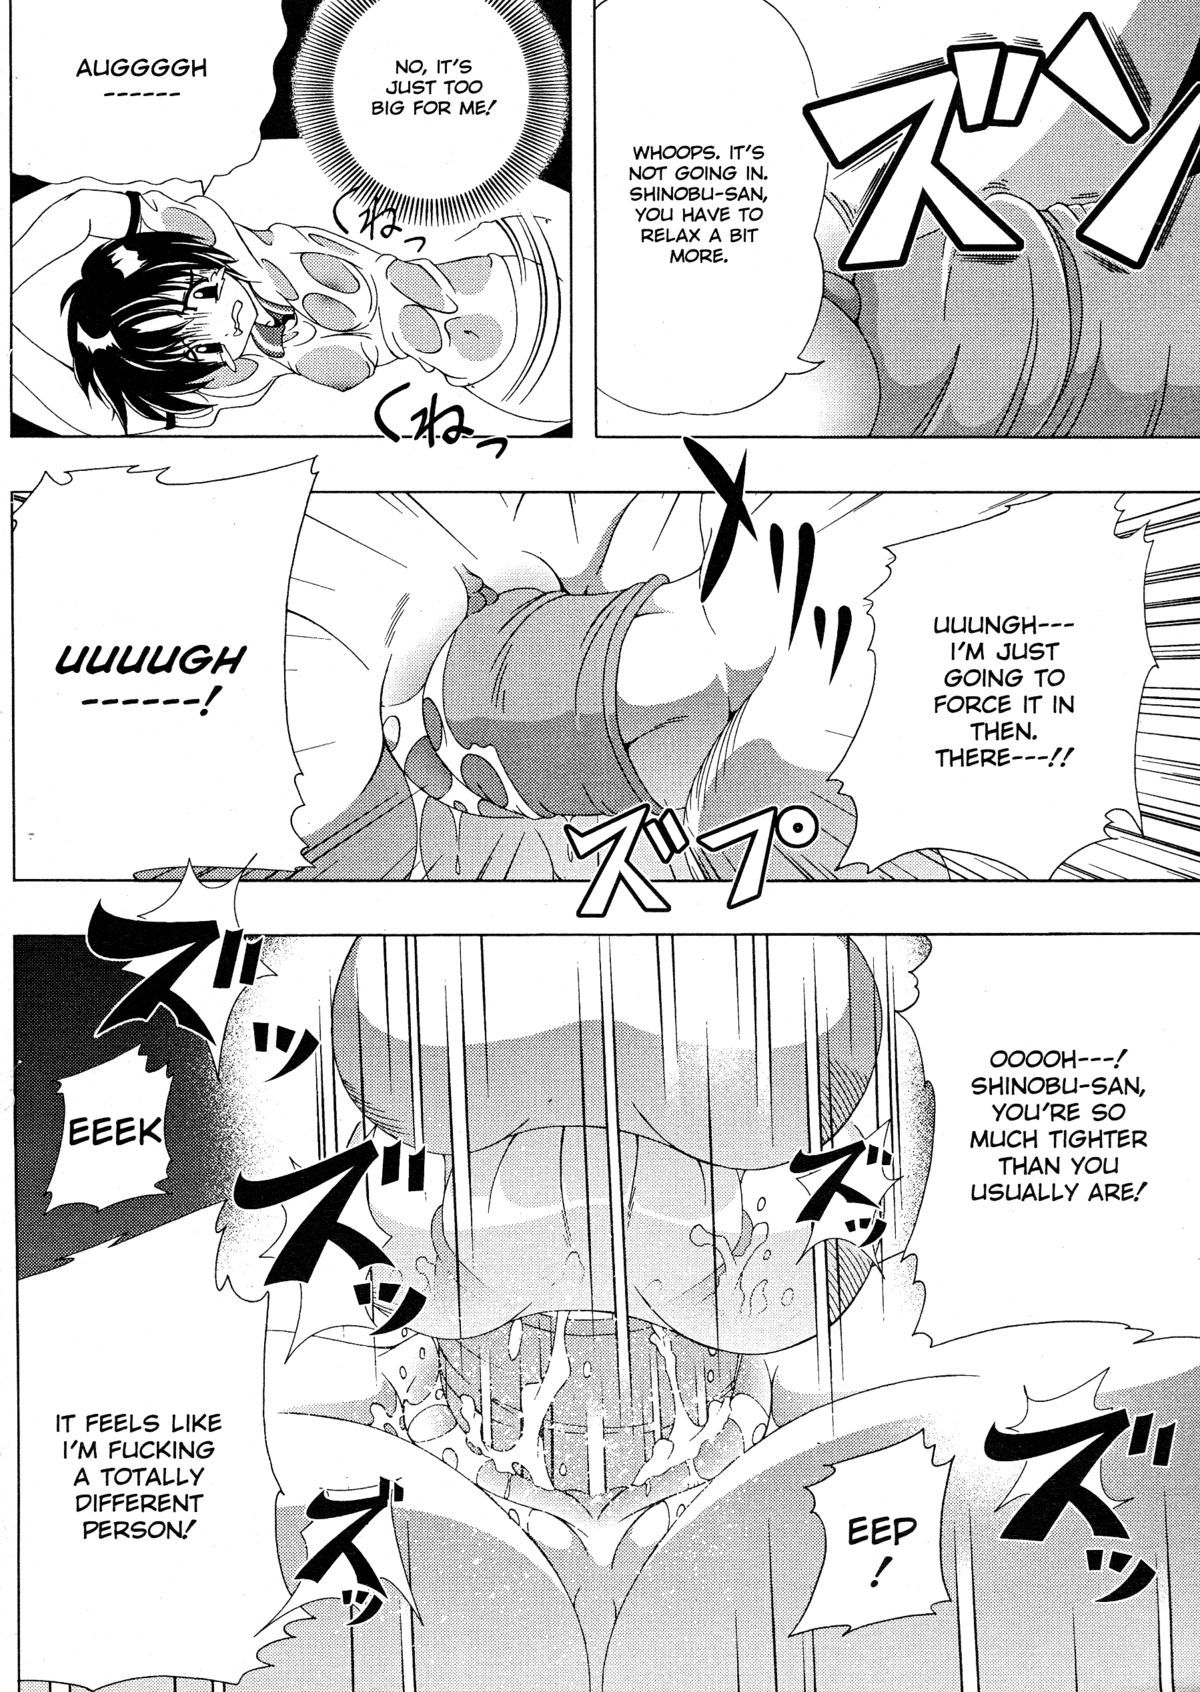 Flashbang!Hi-res 64 hentai manga